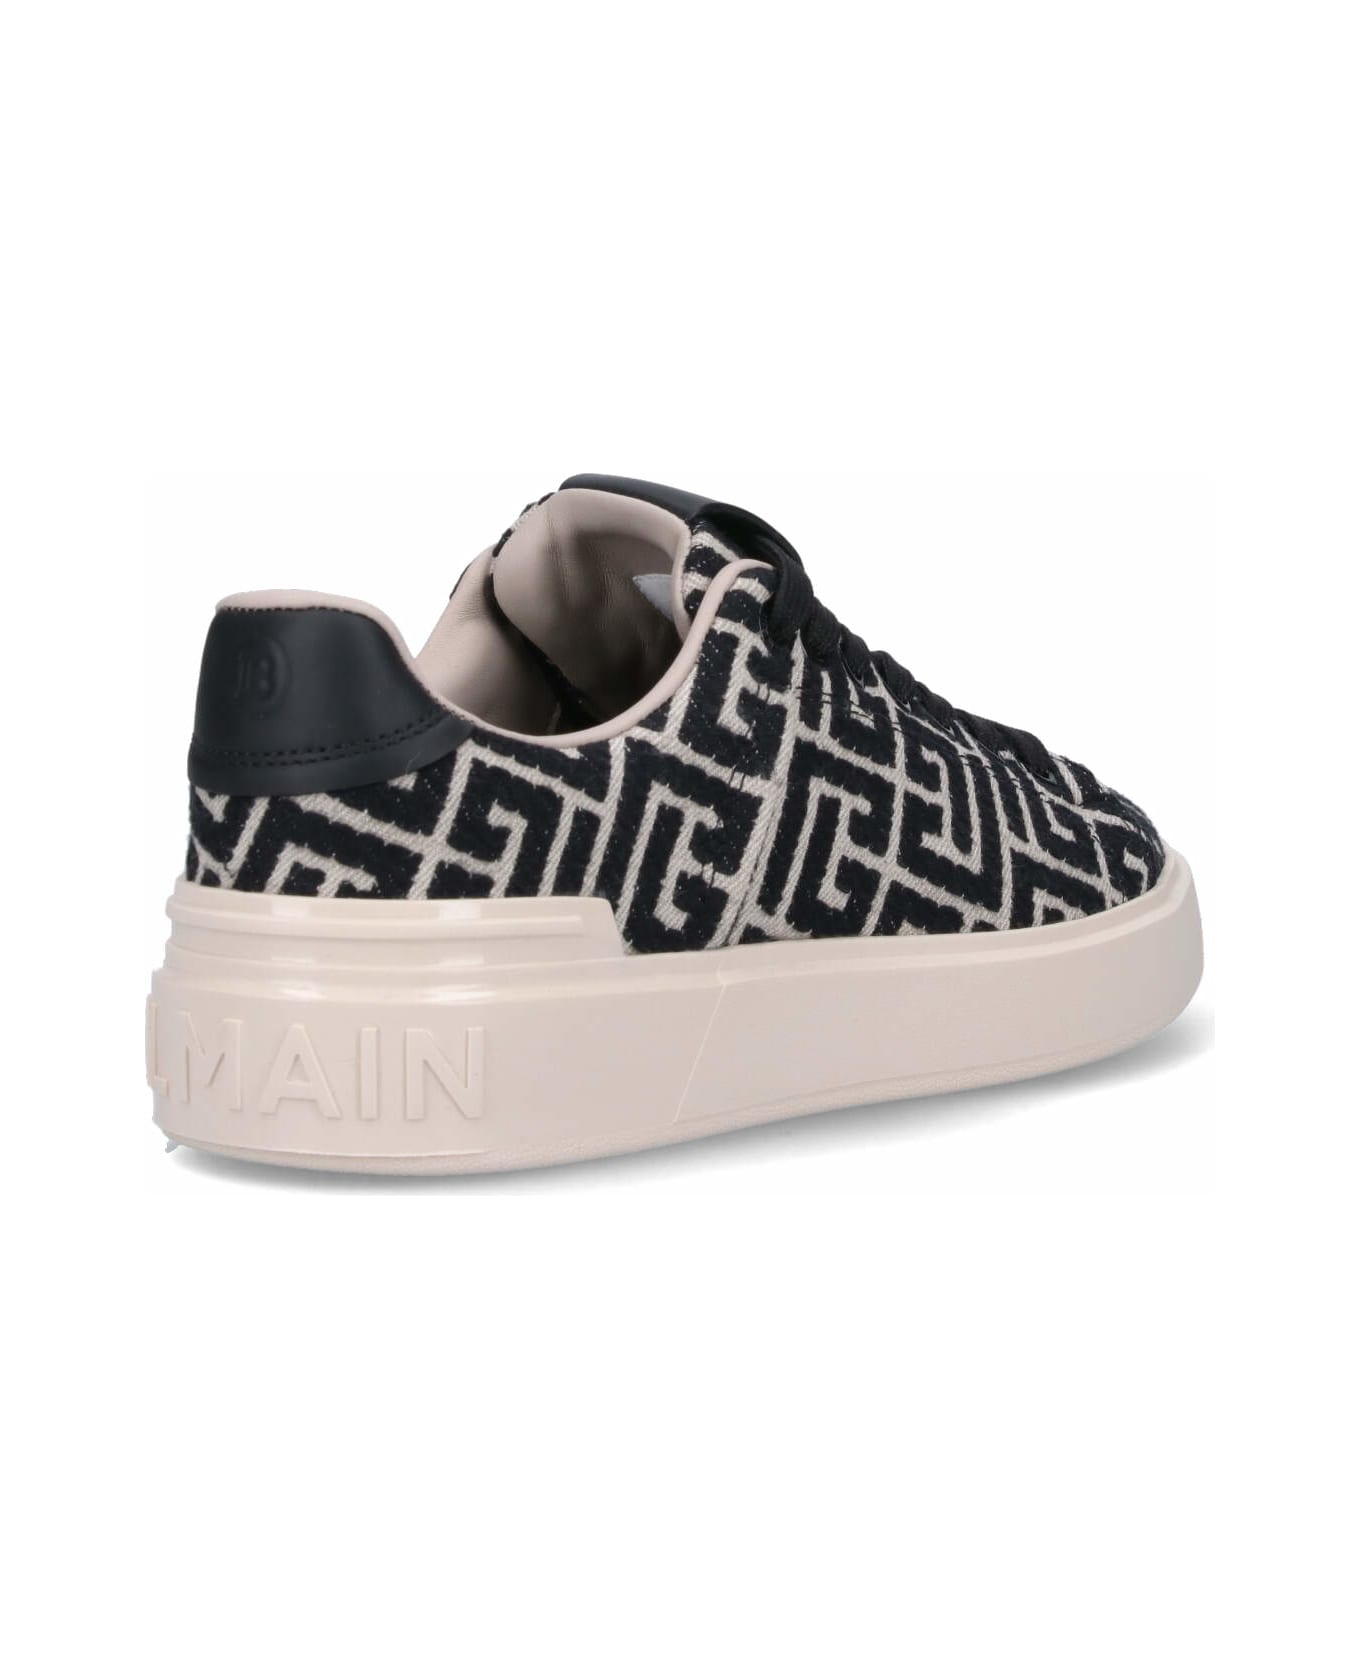 Balmain Canvas Sneakers - Black  